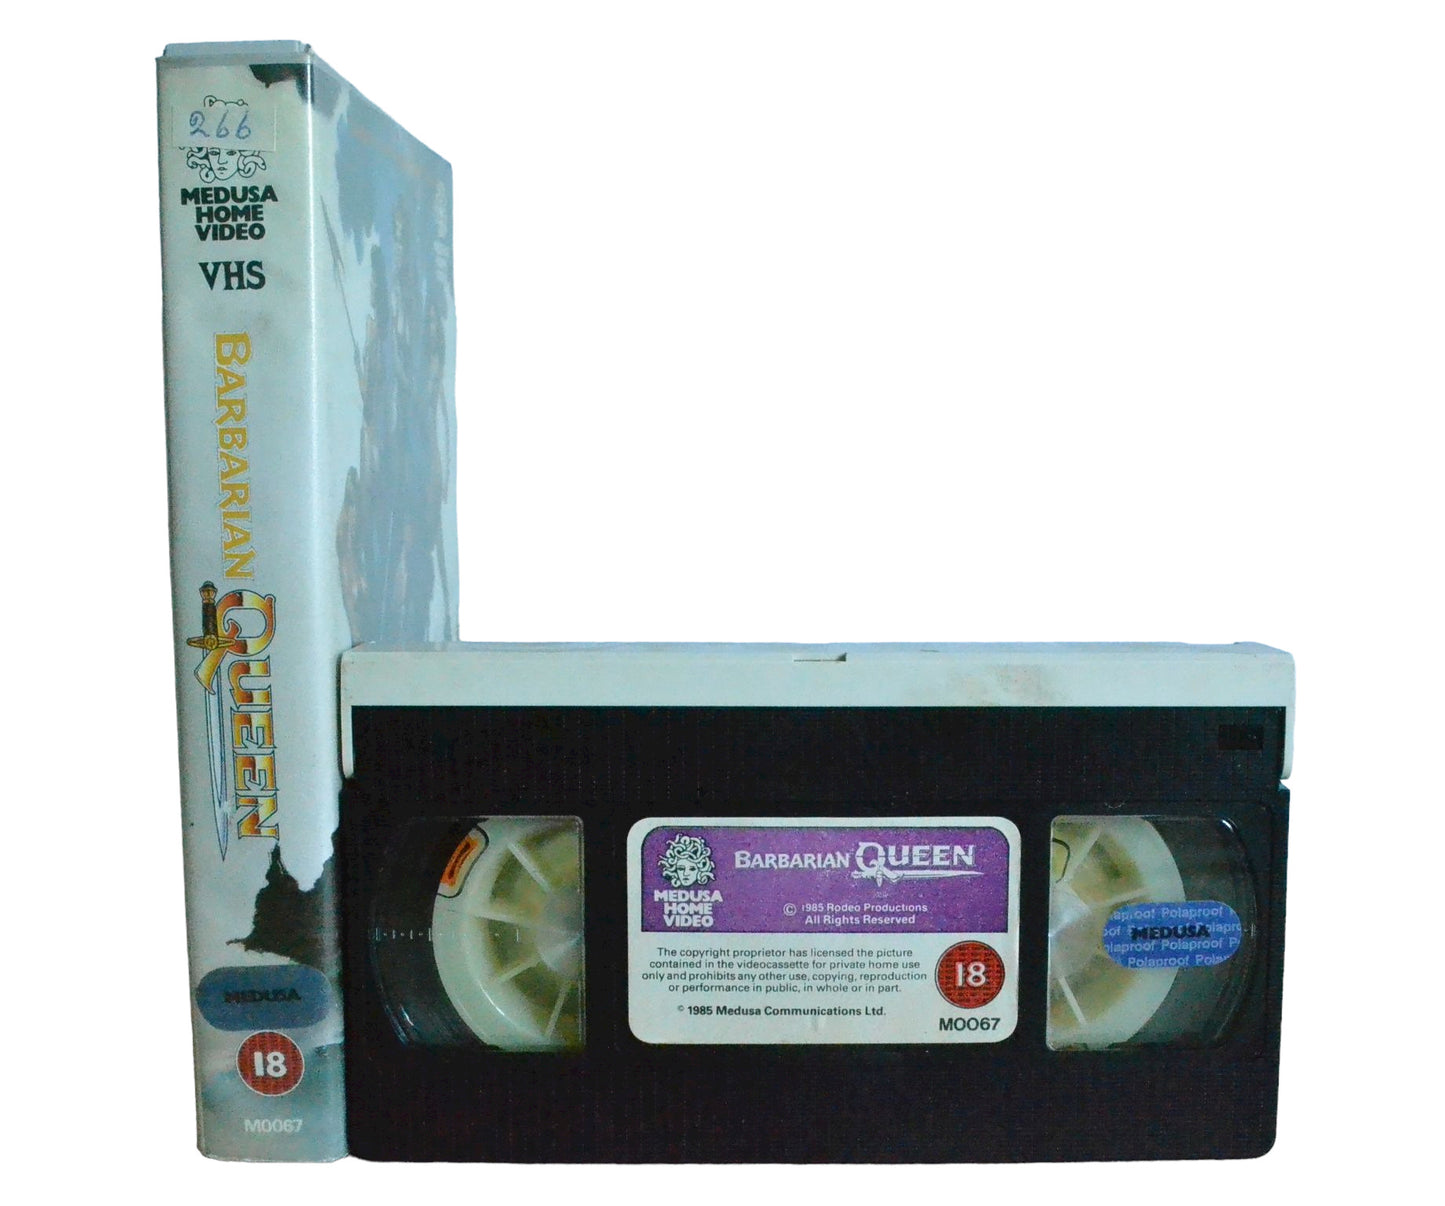 Barbarian Queen - Lana Clarkson - Medusa Home Video - Large Box - PAL - VHS-